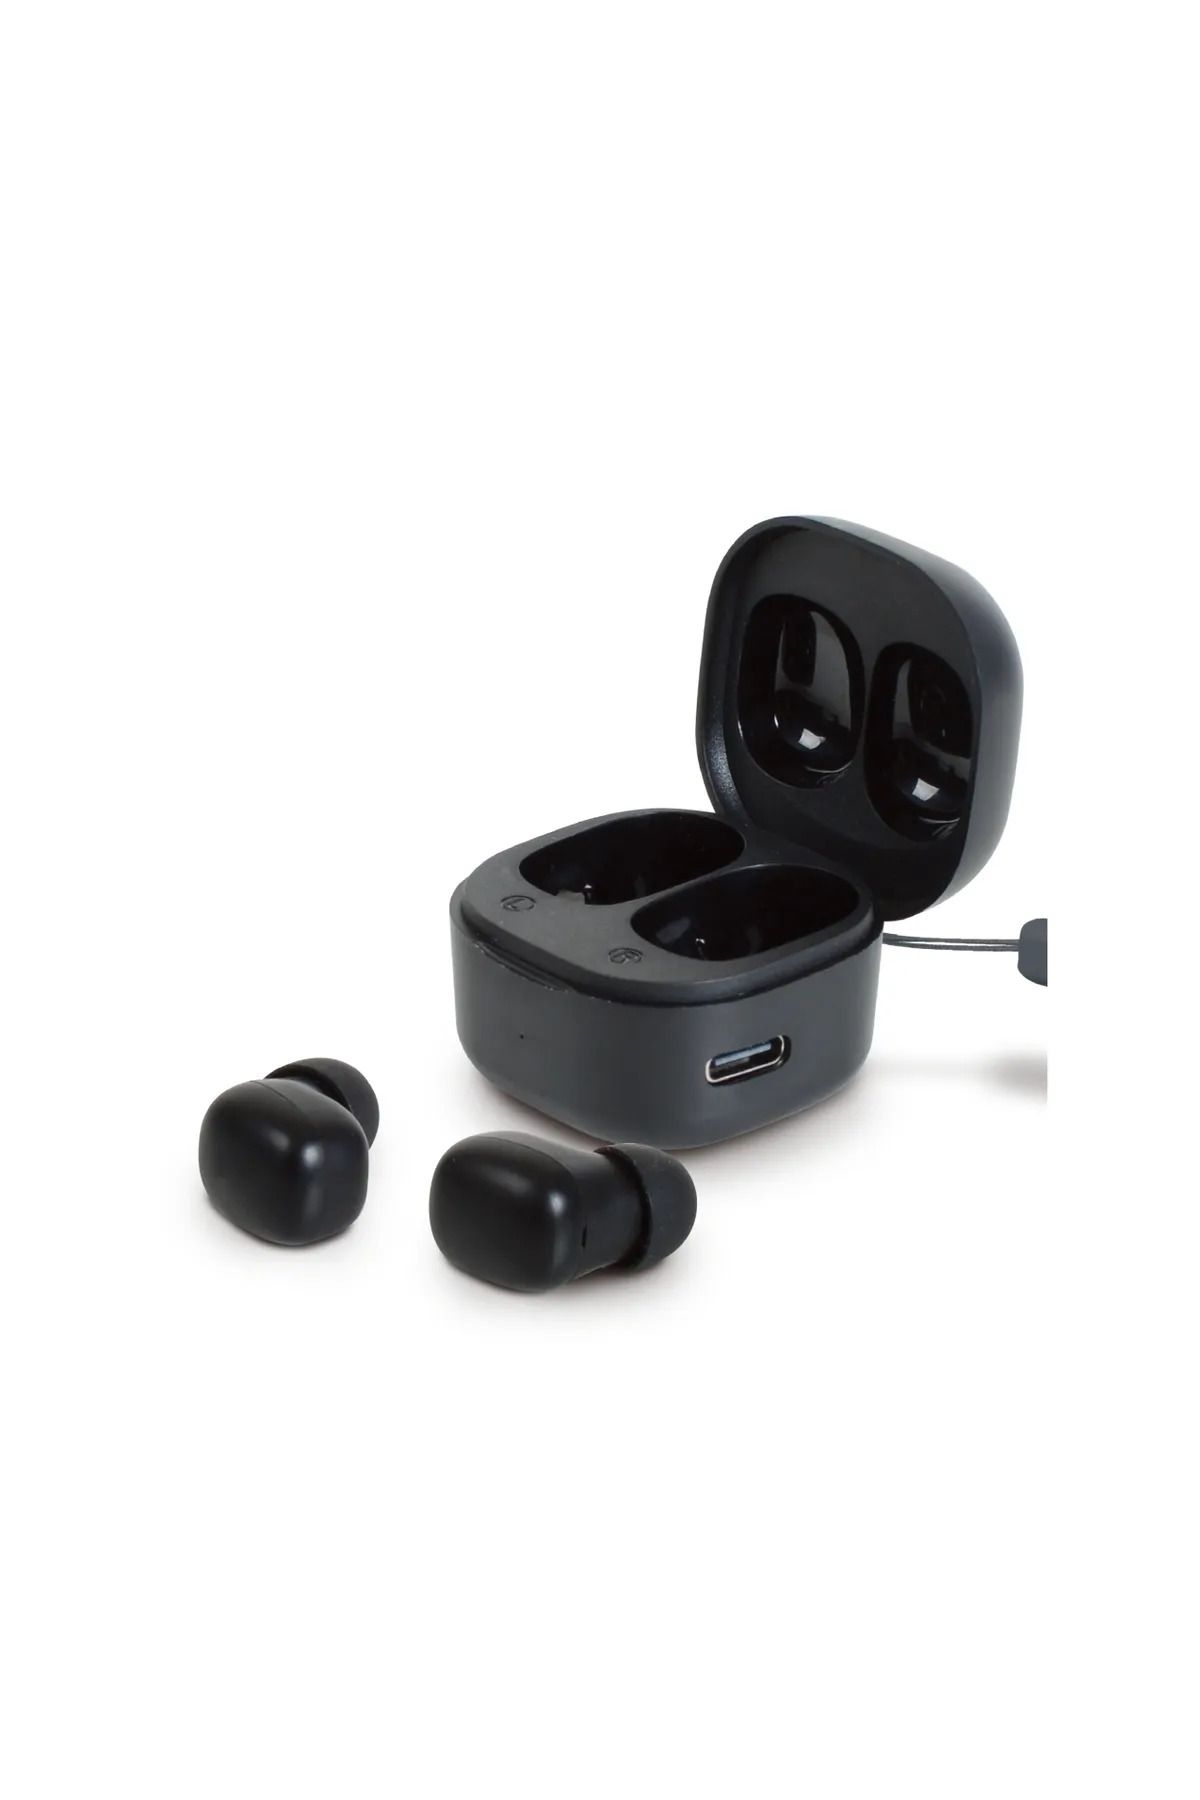 Piranha 9961 Kablosuz Kulak İçi Bluetooth Kulaklık / Wireless Earphone